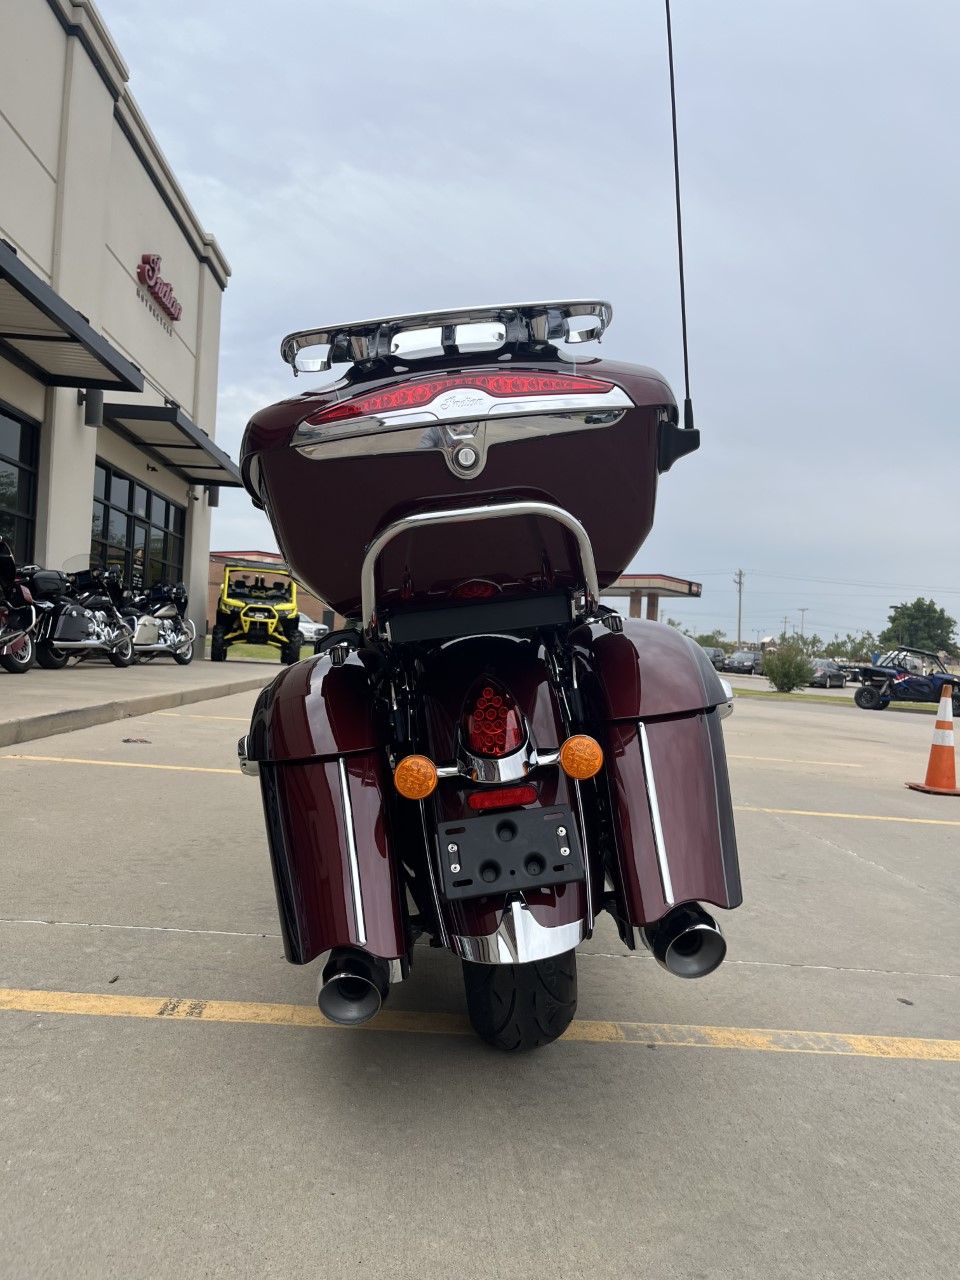 2022 Indian Motorcycle Roadmaster® in Norman, Oklahoma - Photo 7